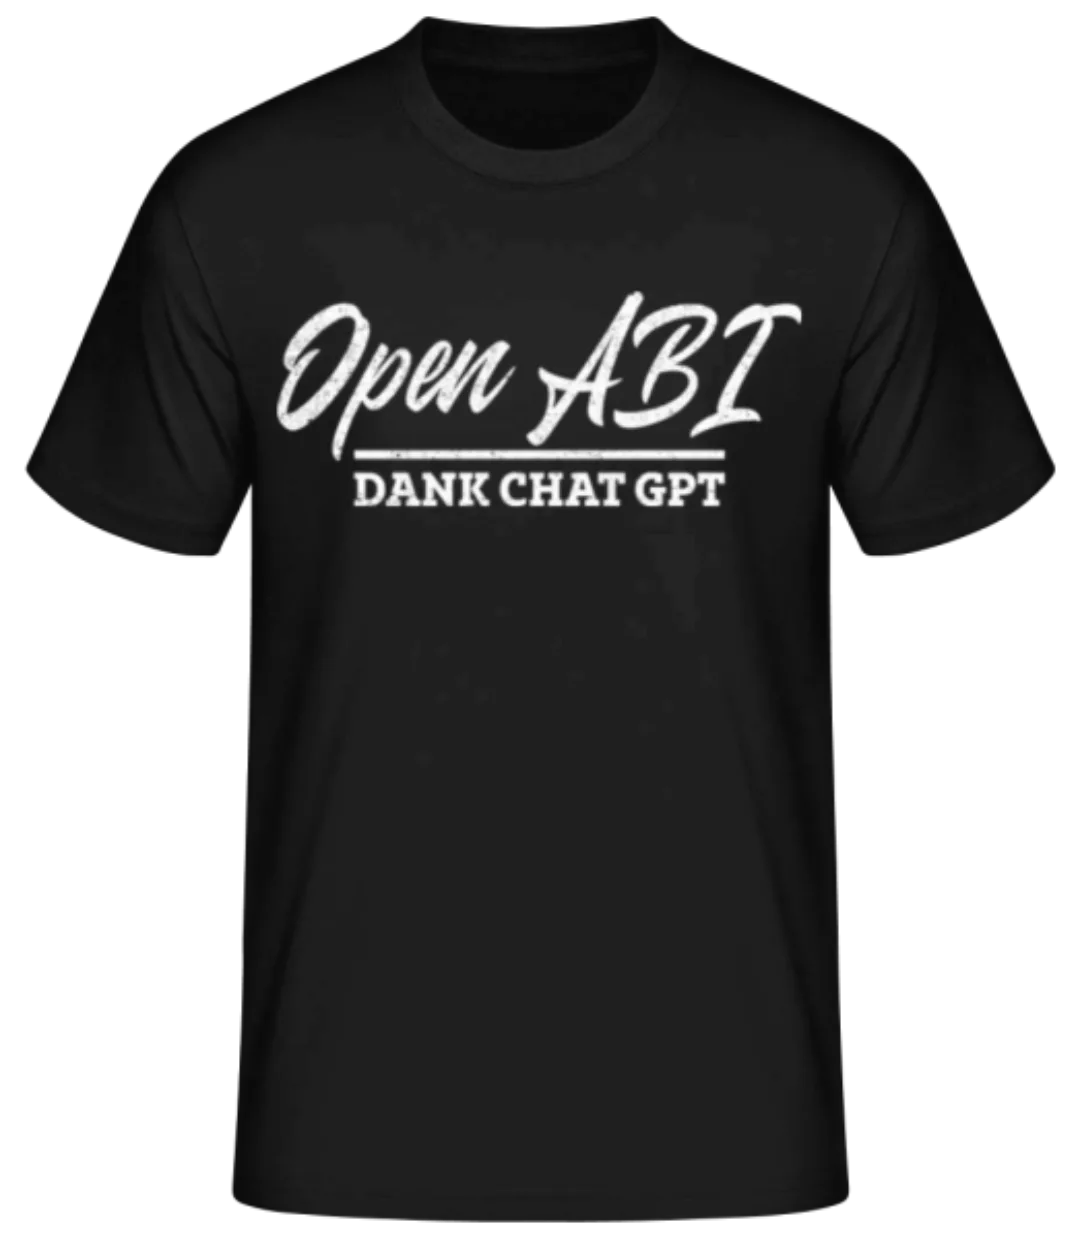 Open ABI Dank ChatGPT · Männer Basic T-Shirt günstig online kaufen